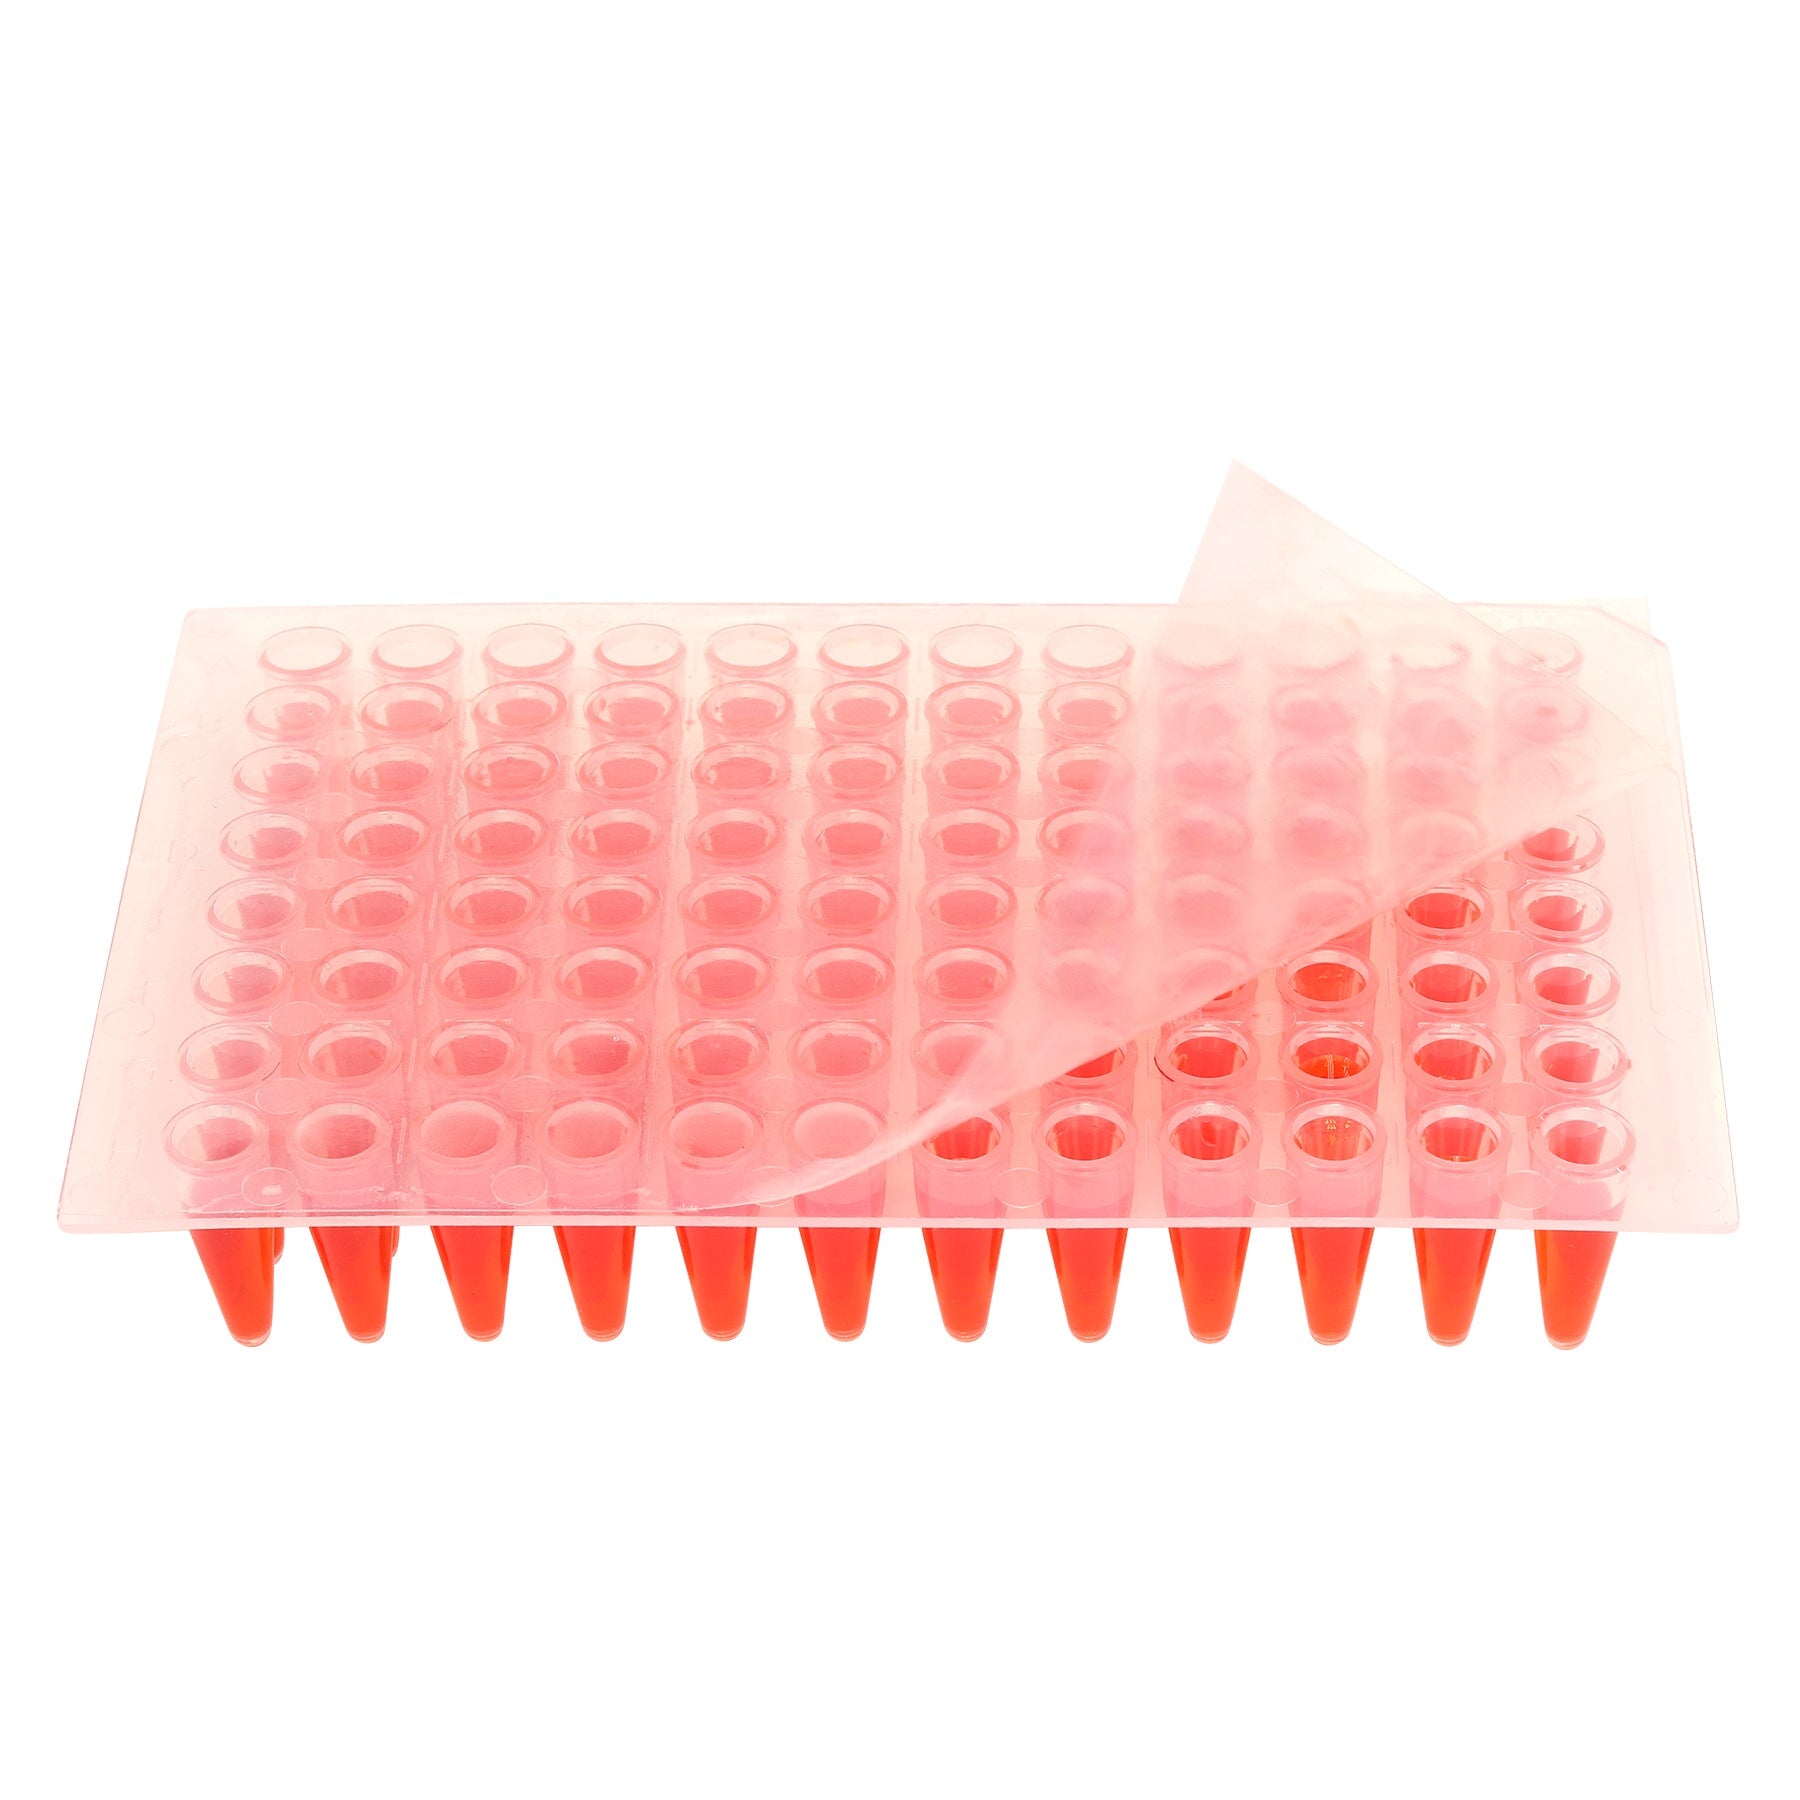 MTC Bio P1001-PCR Sealing film, PCR 96 Well Plate Sealing Membrane, 10 bags of 10 seals, 100/pk